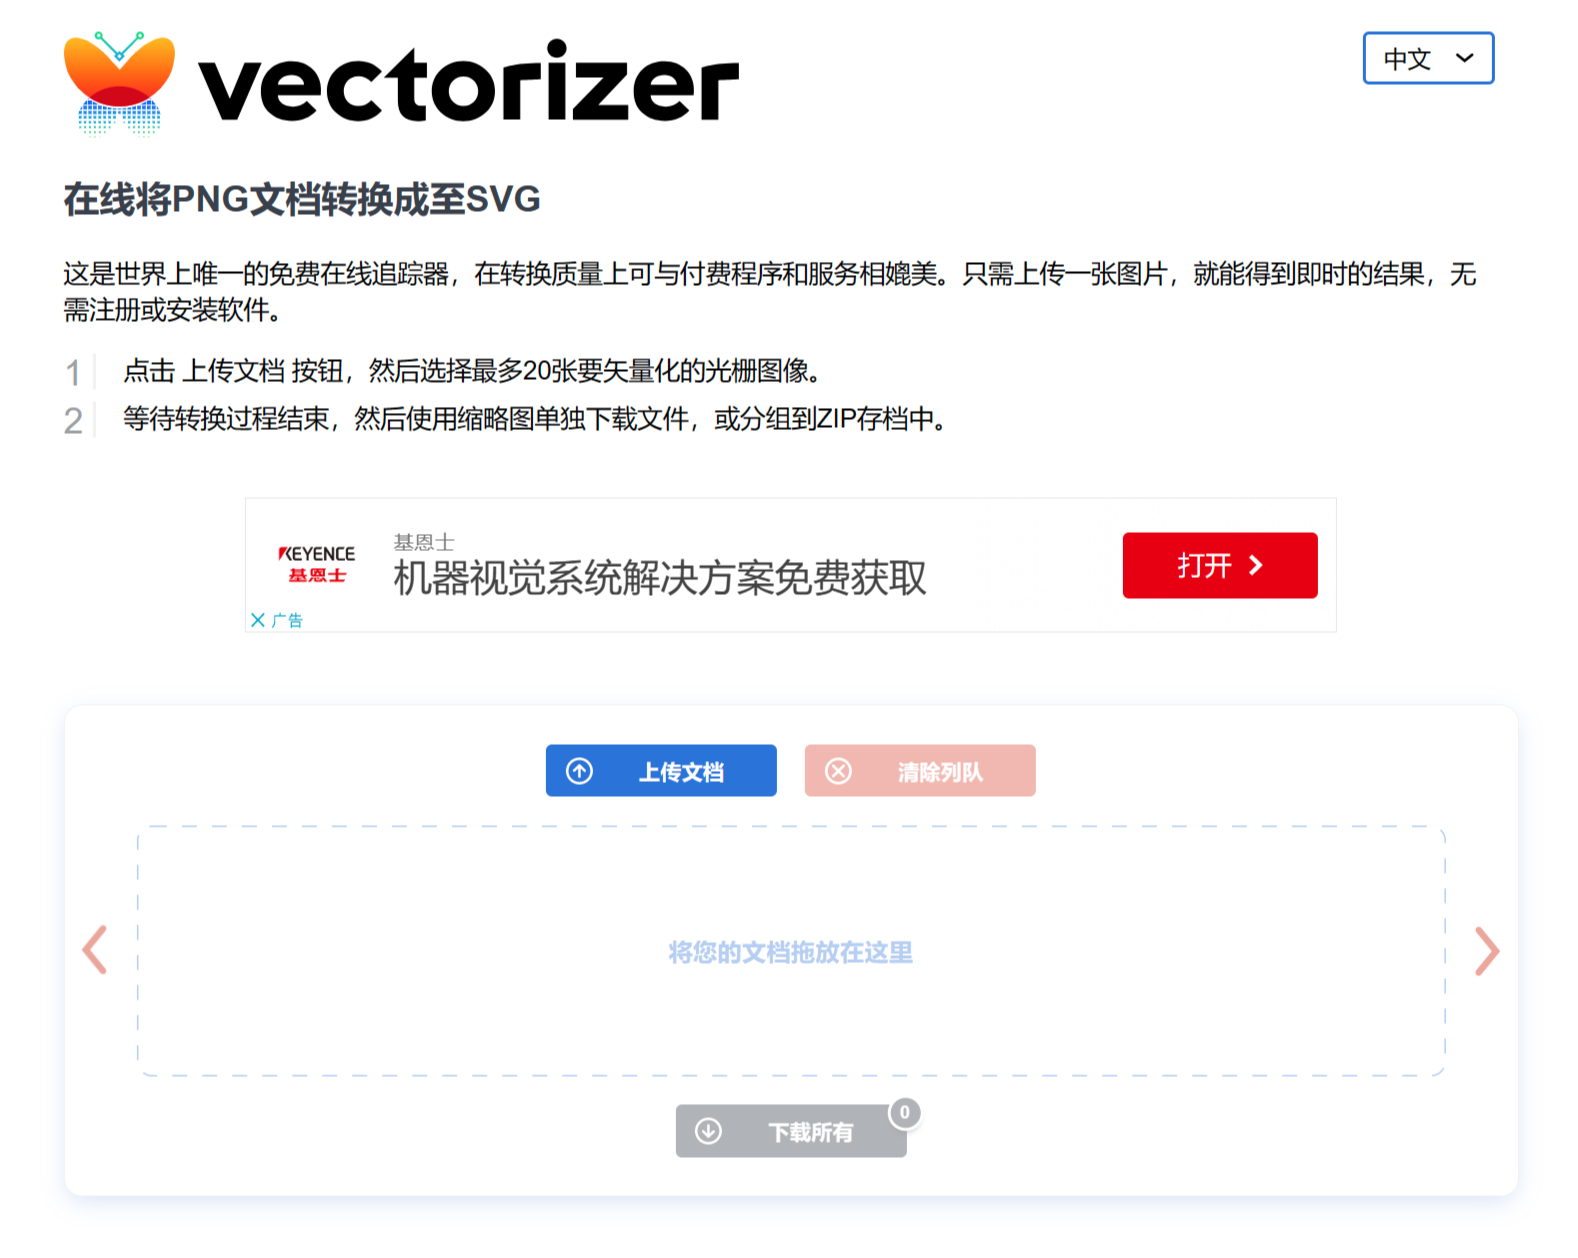 vectorizer图片矢量化在线工具